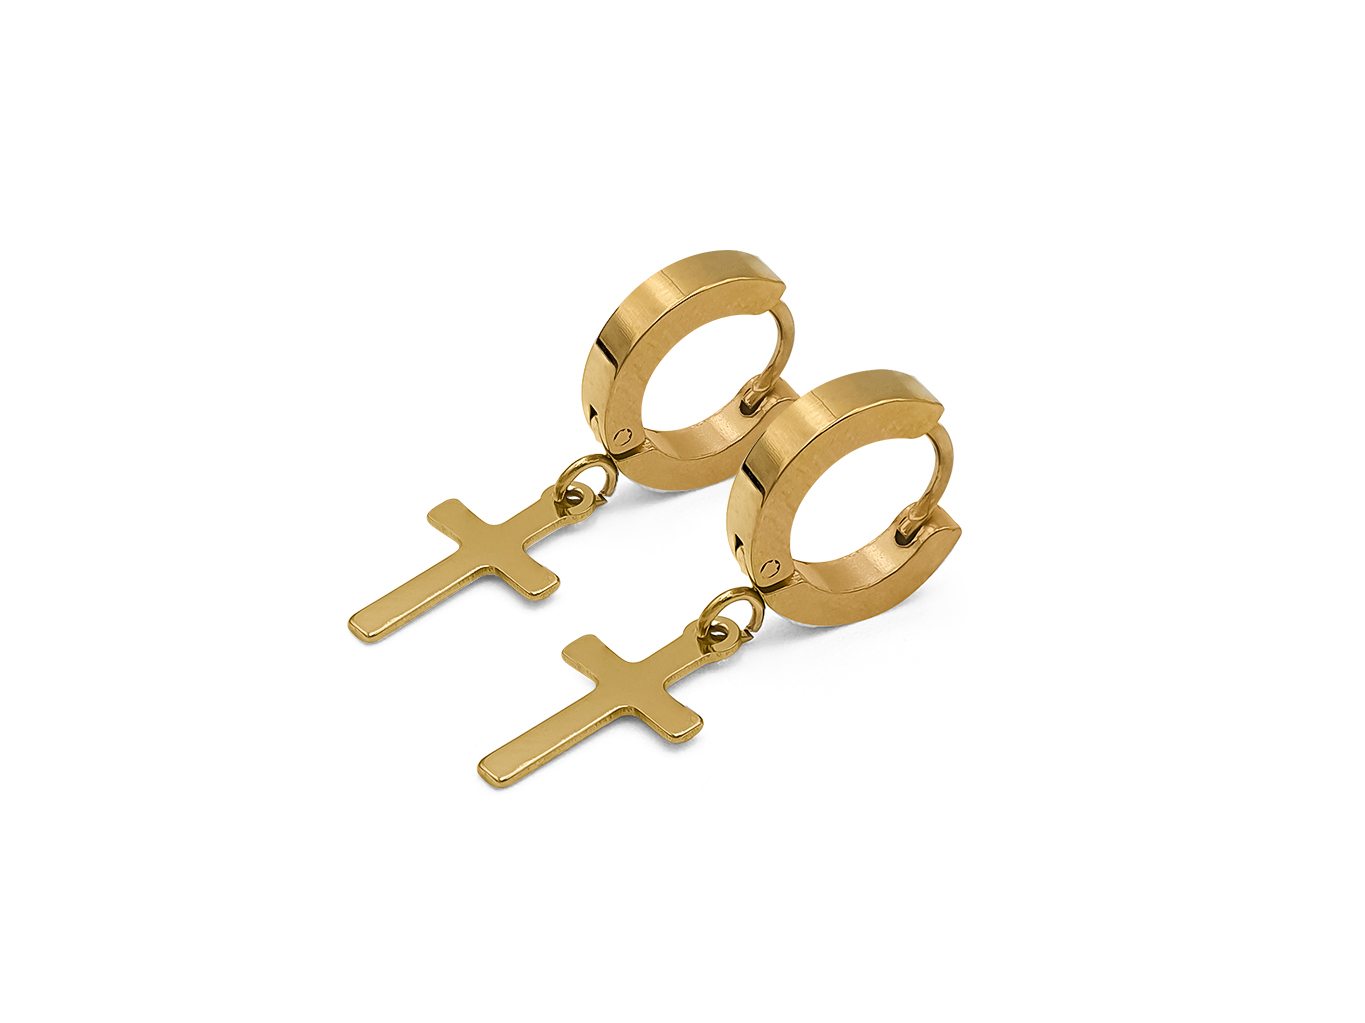 Cross earrings gold plated - Adema